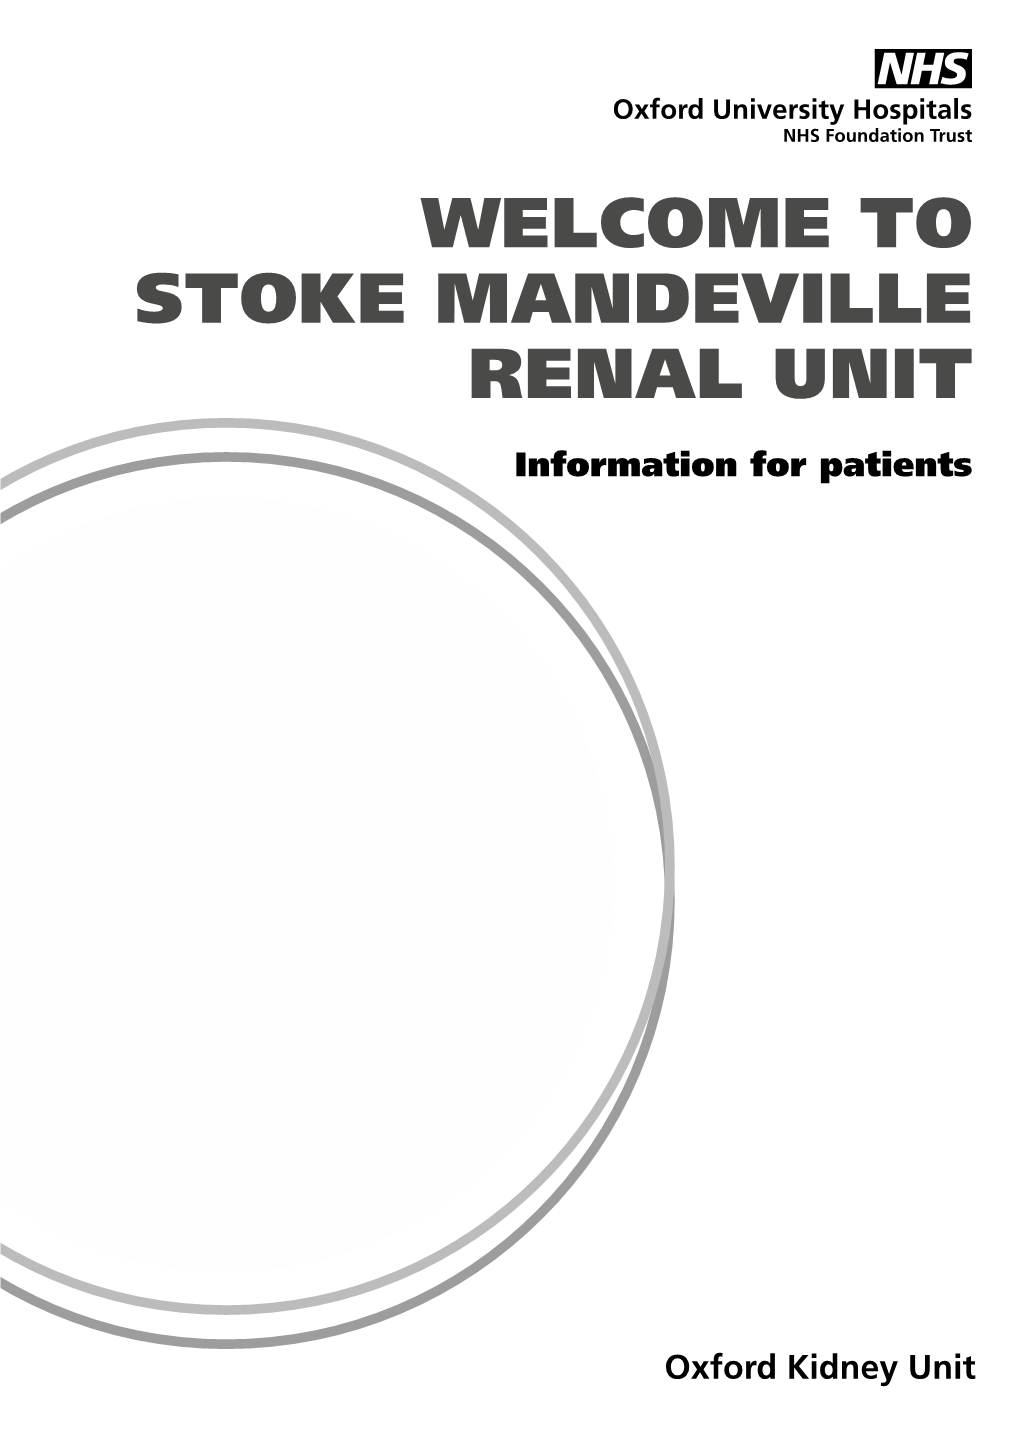 Stoke Mandeville Renal Unit